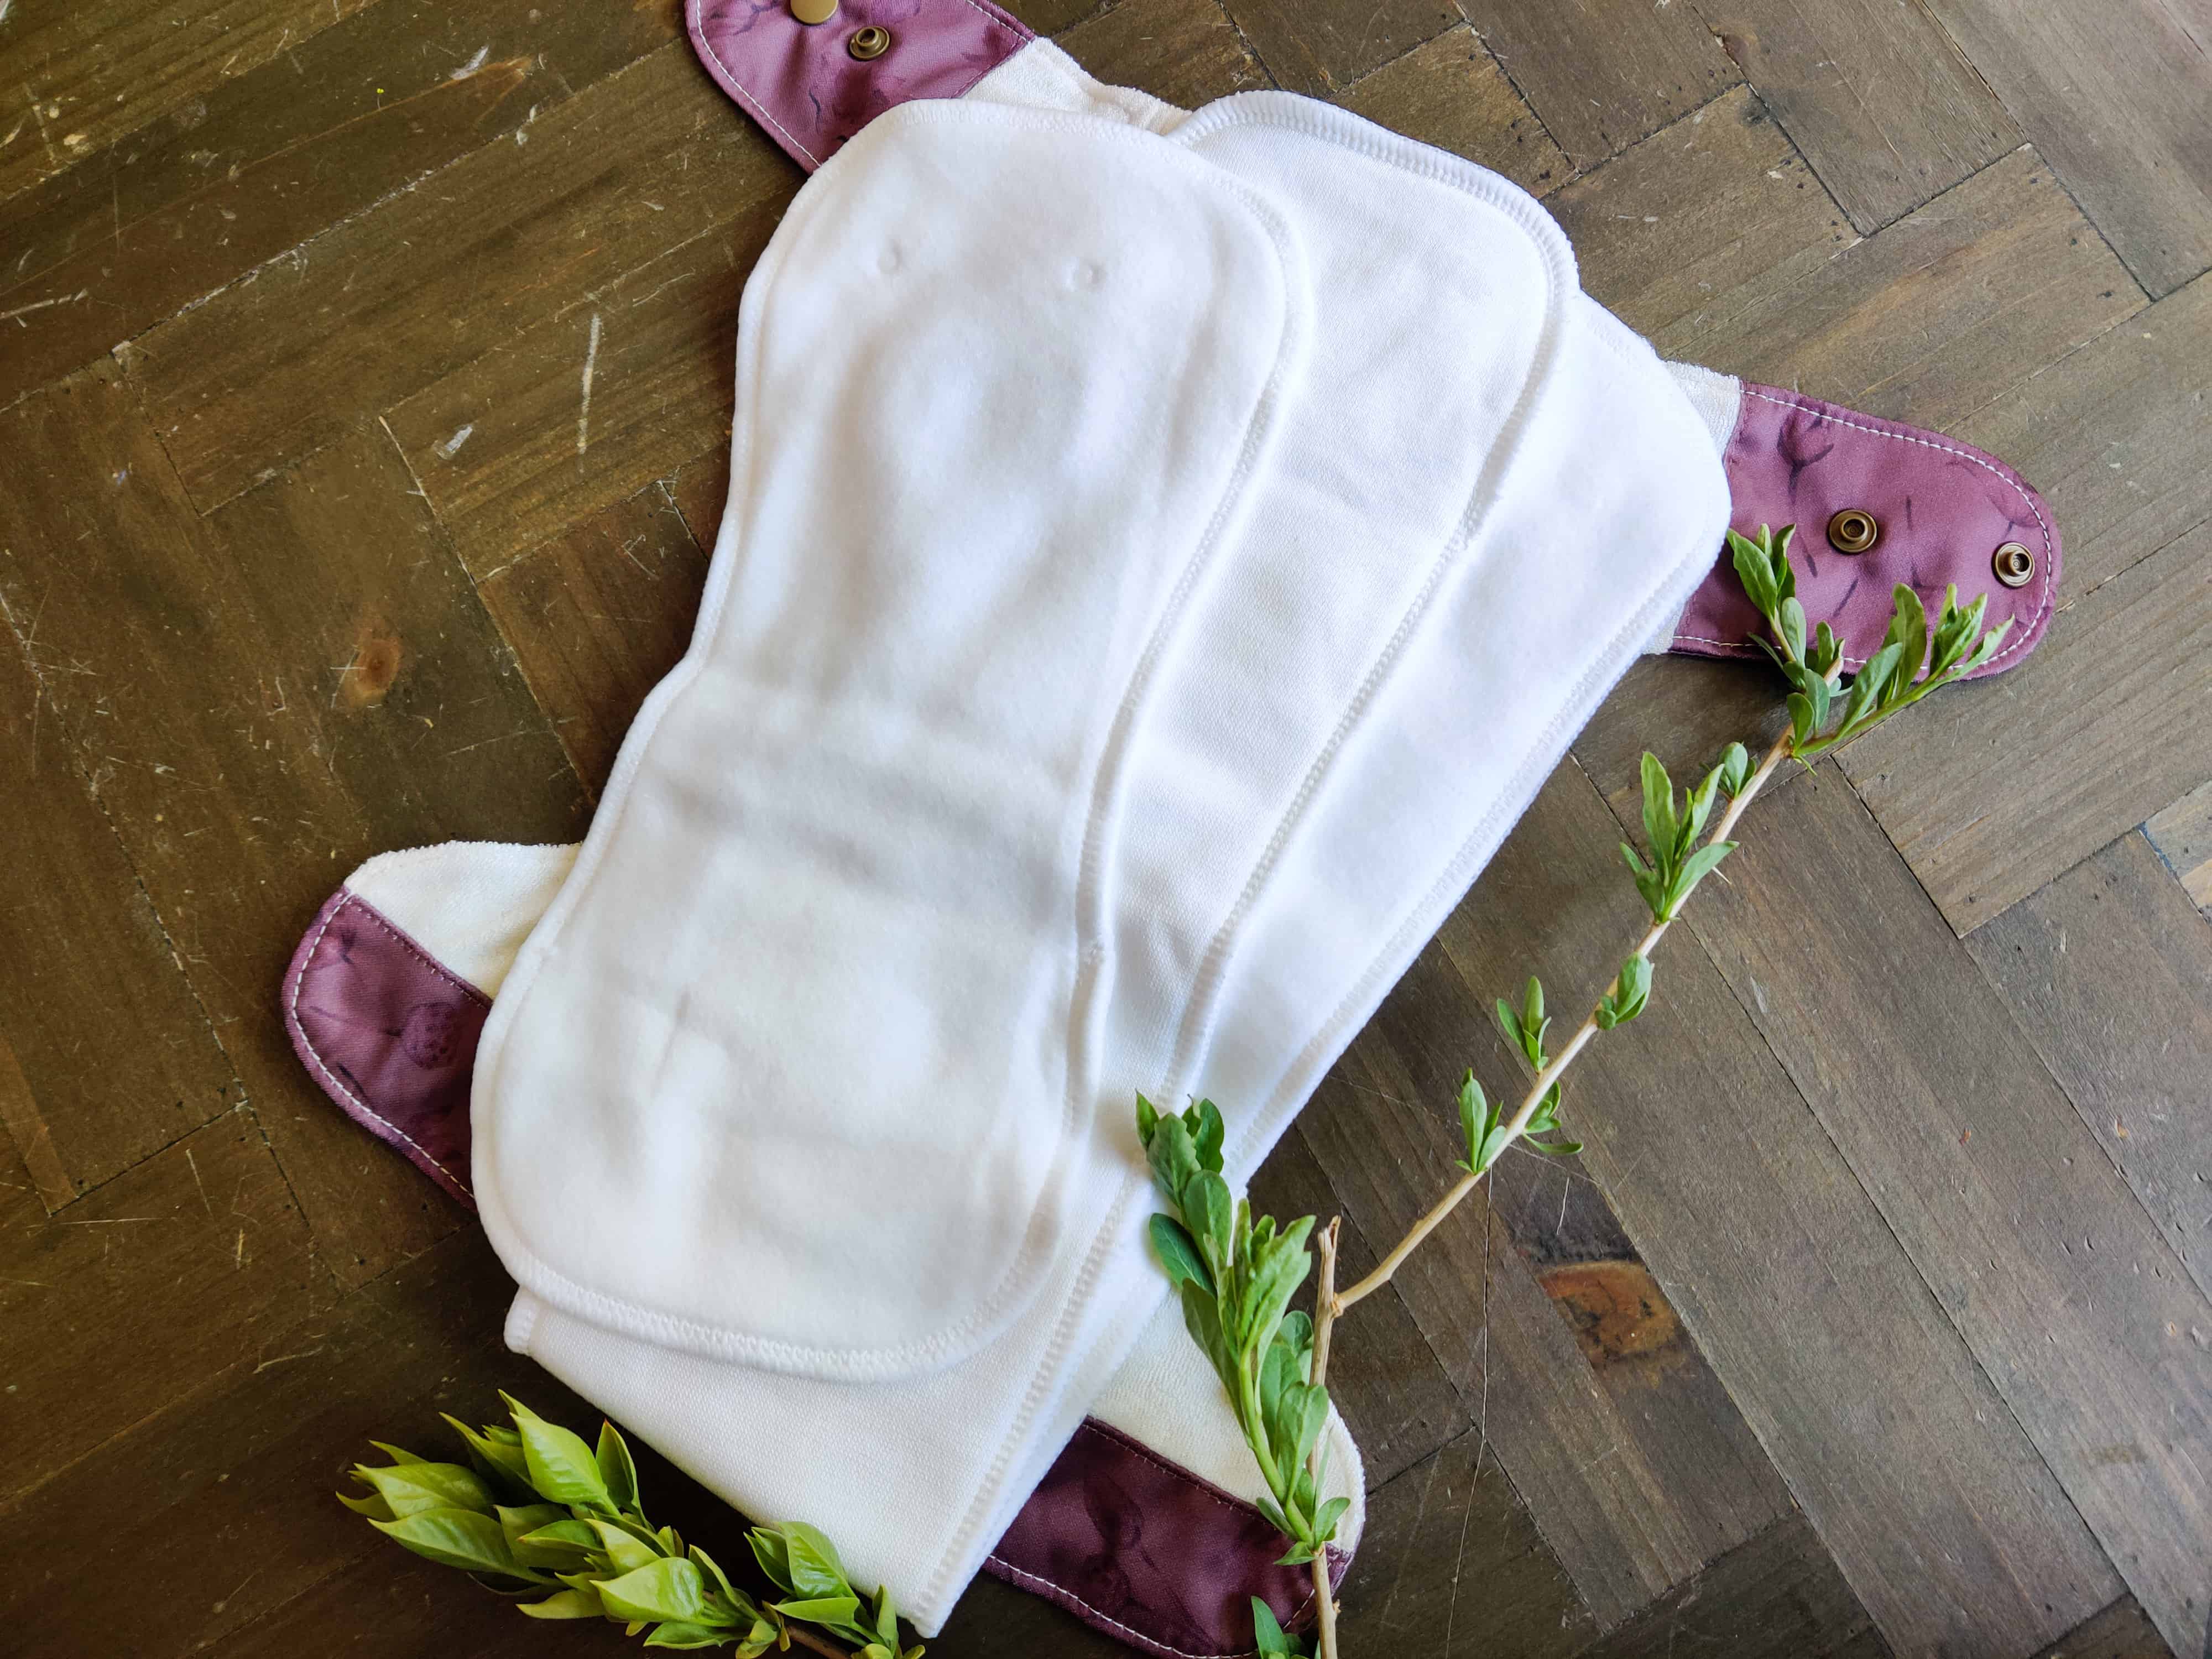 cloth diaper inserts for aio